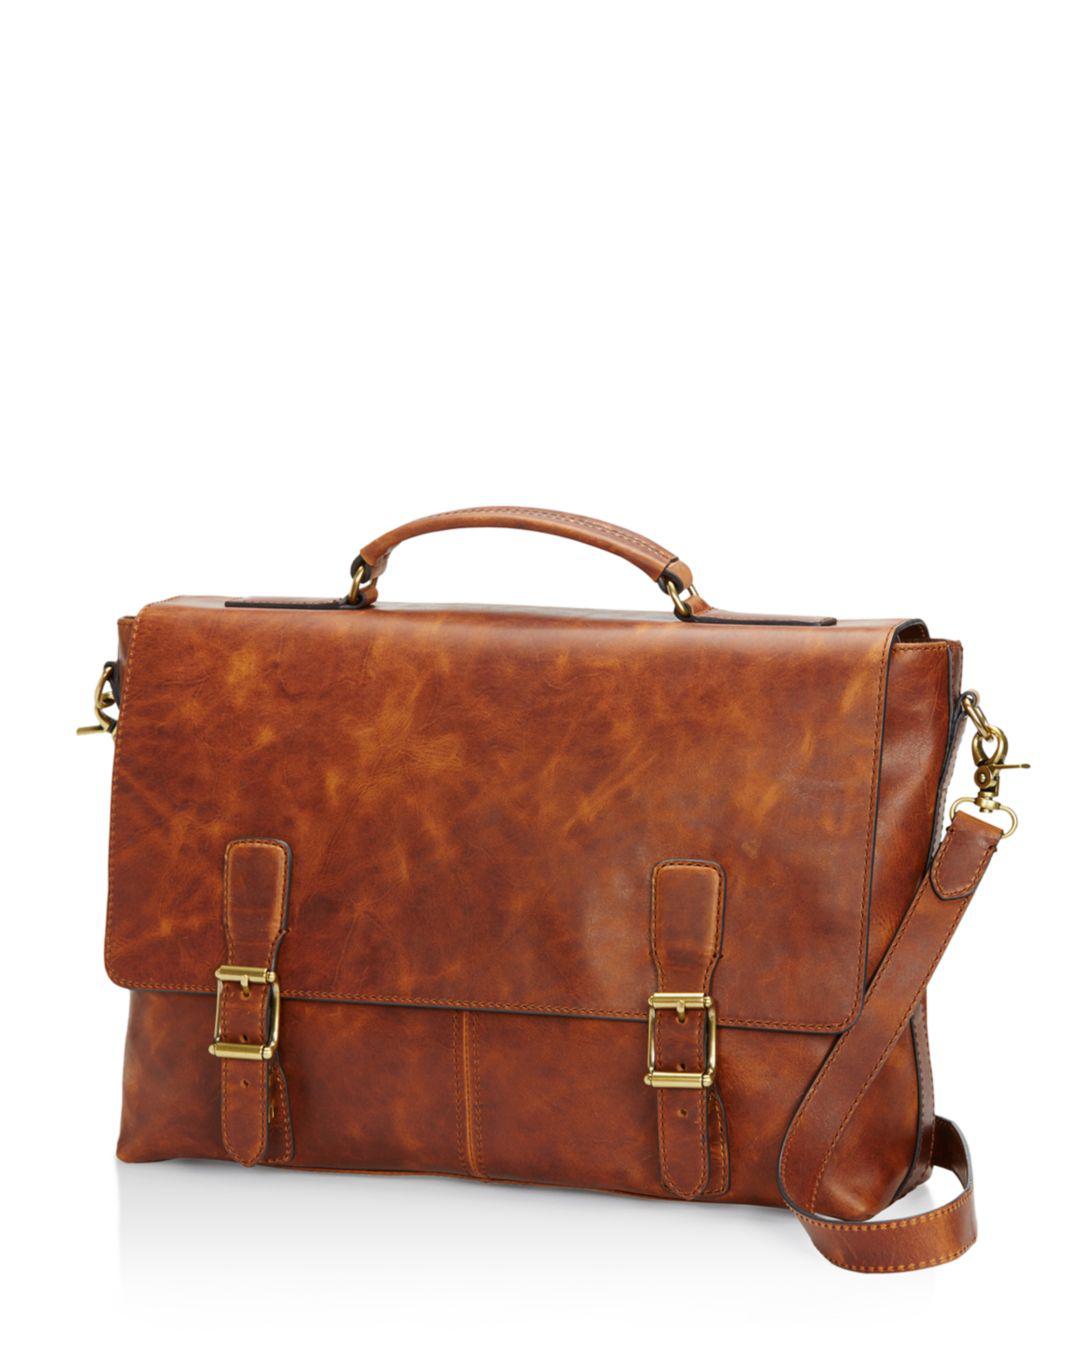 Lyst - Frye Logan Top Handle Messenger Bag in Brown for Men